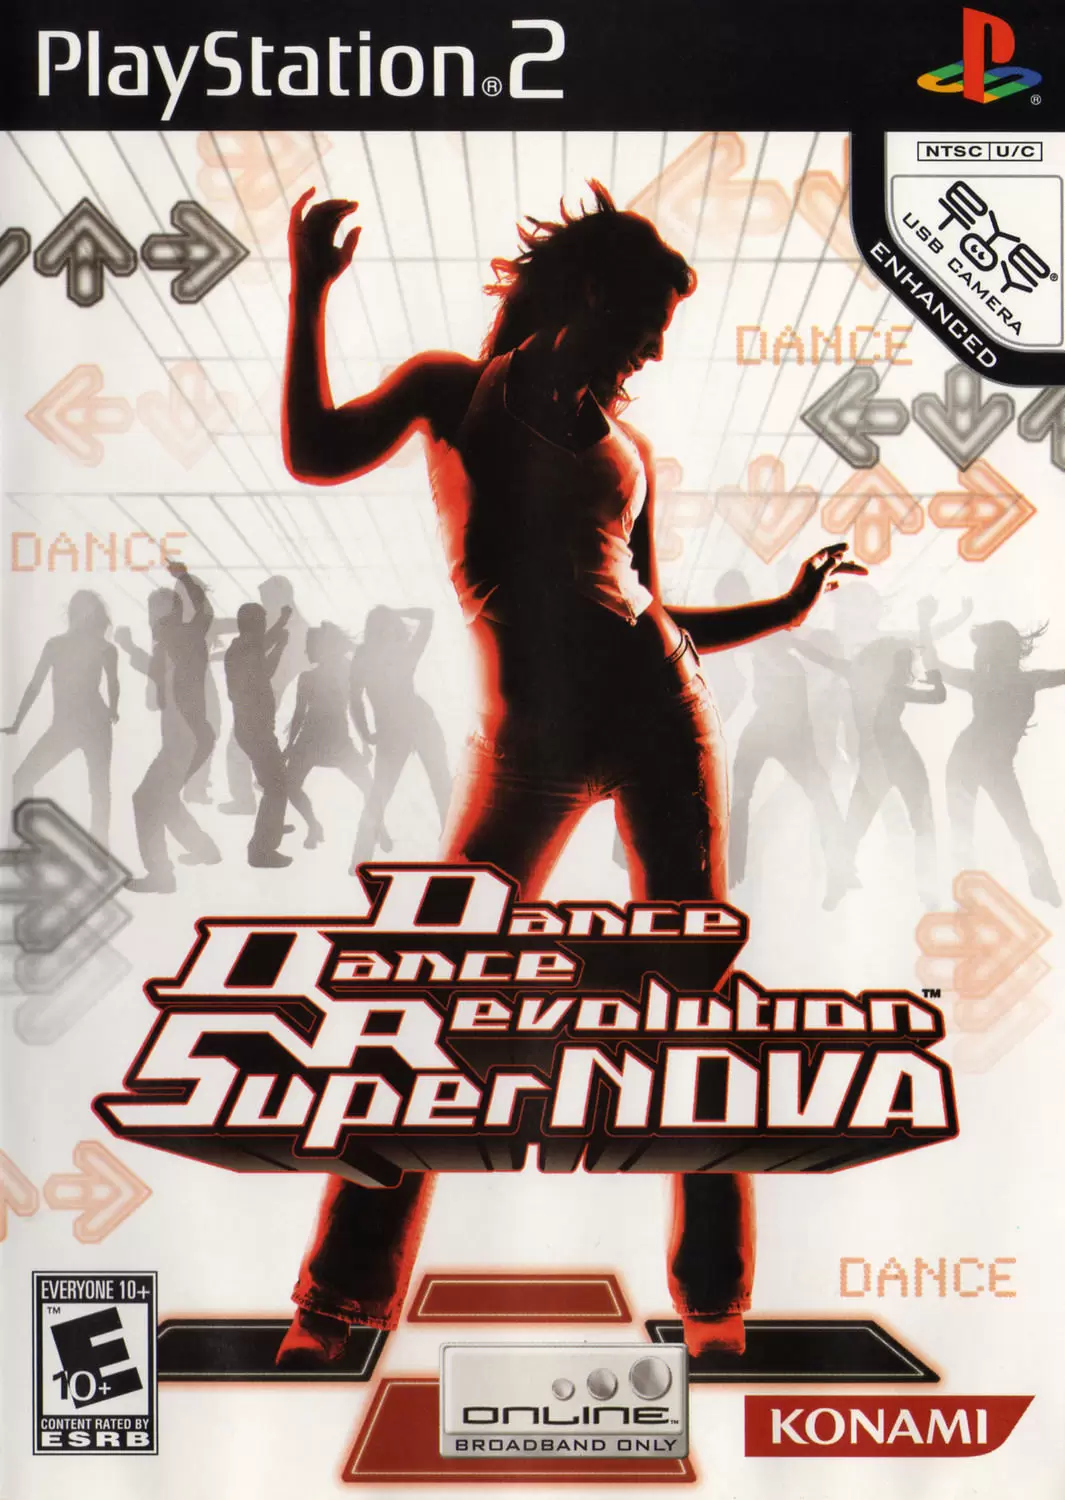 PS2 Games - Dance Dance Revolution SuperNOVA